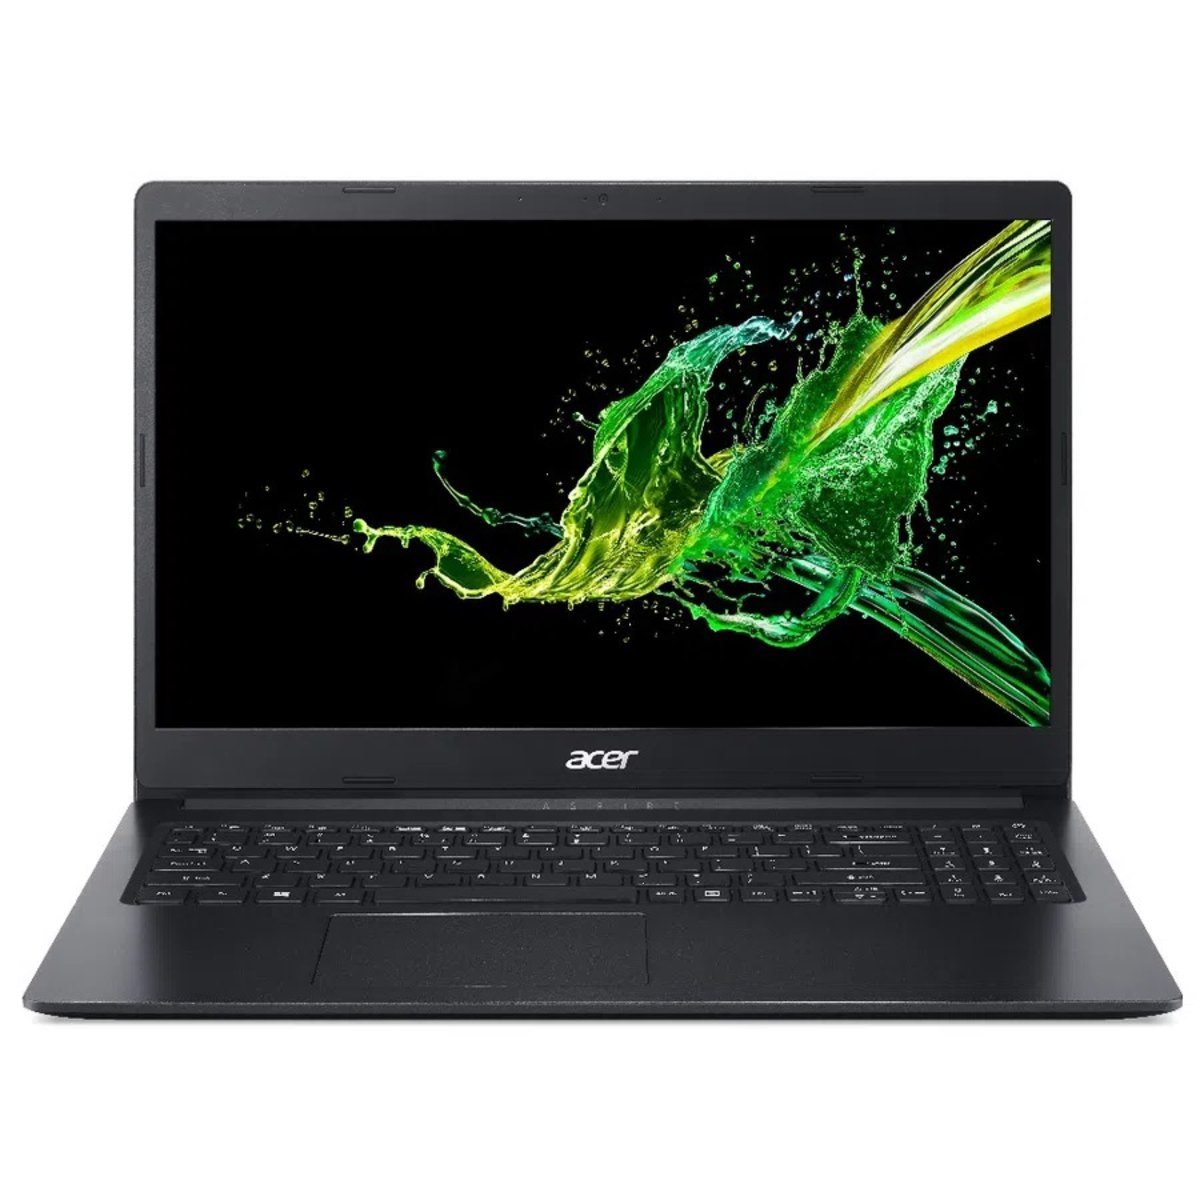 Notebook Acer A315 Intel Celeron N4000 Memoria 4gb Ssd 120GB Tela 15.6' Hd Windows 10 Home 